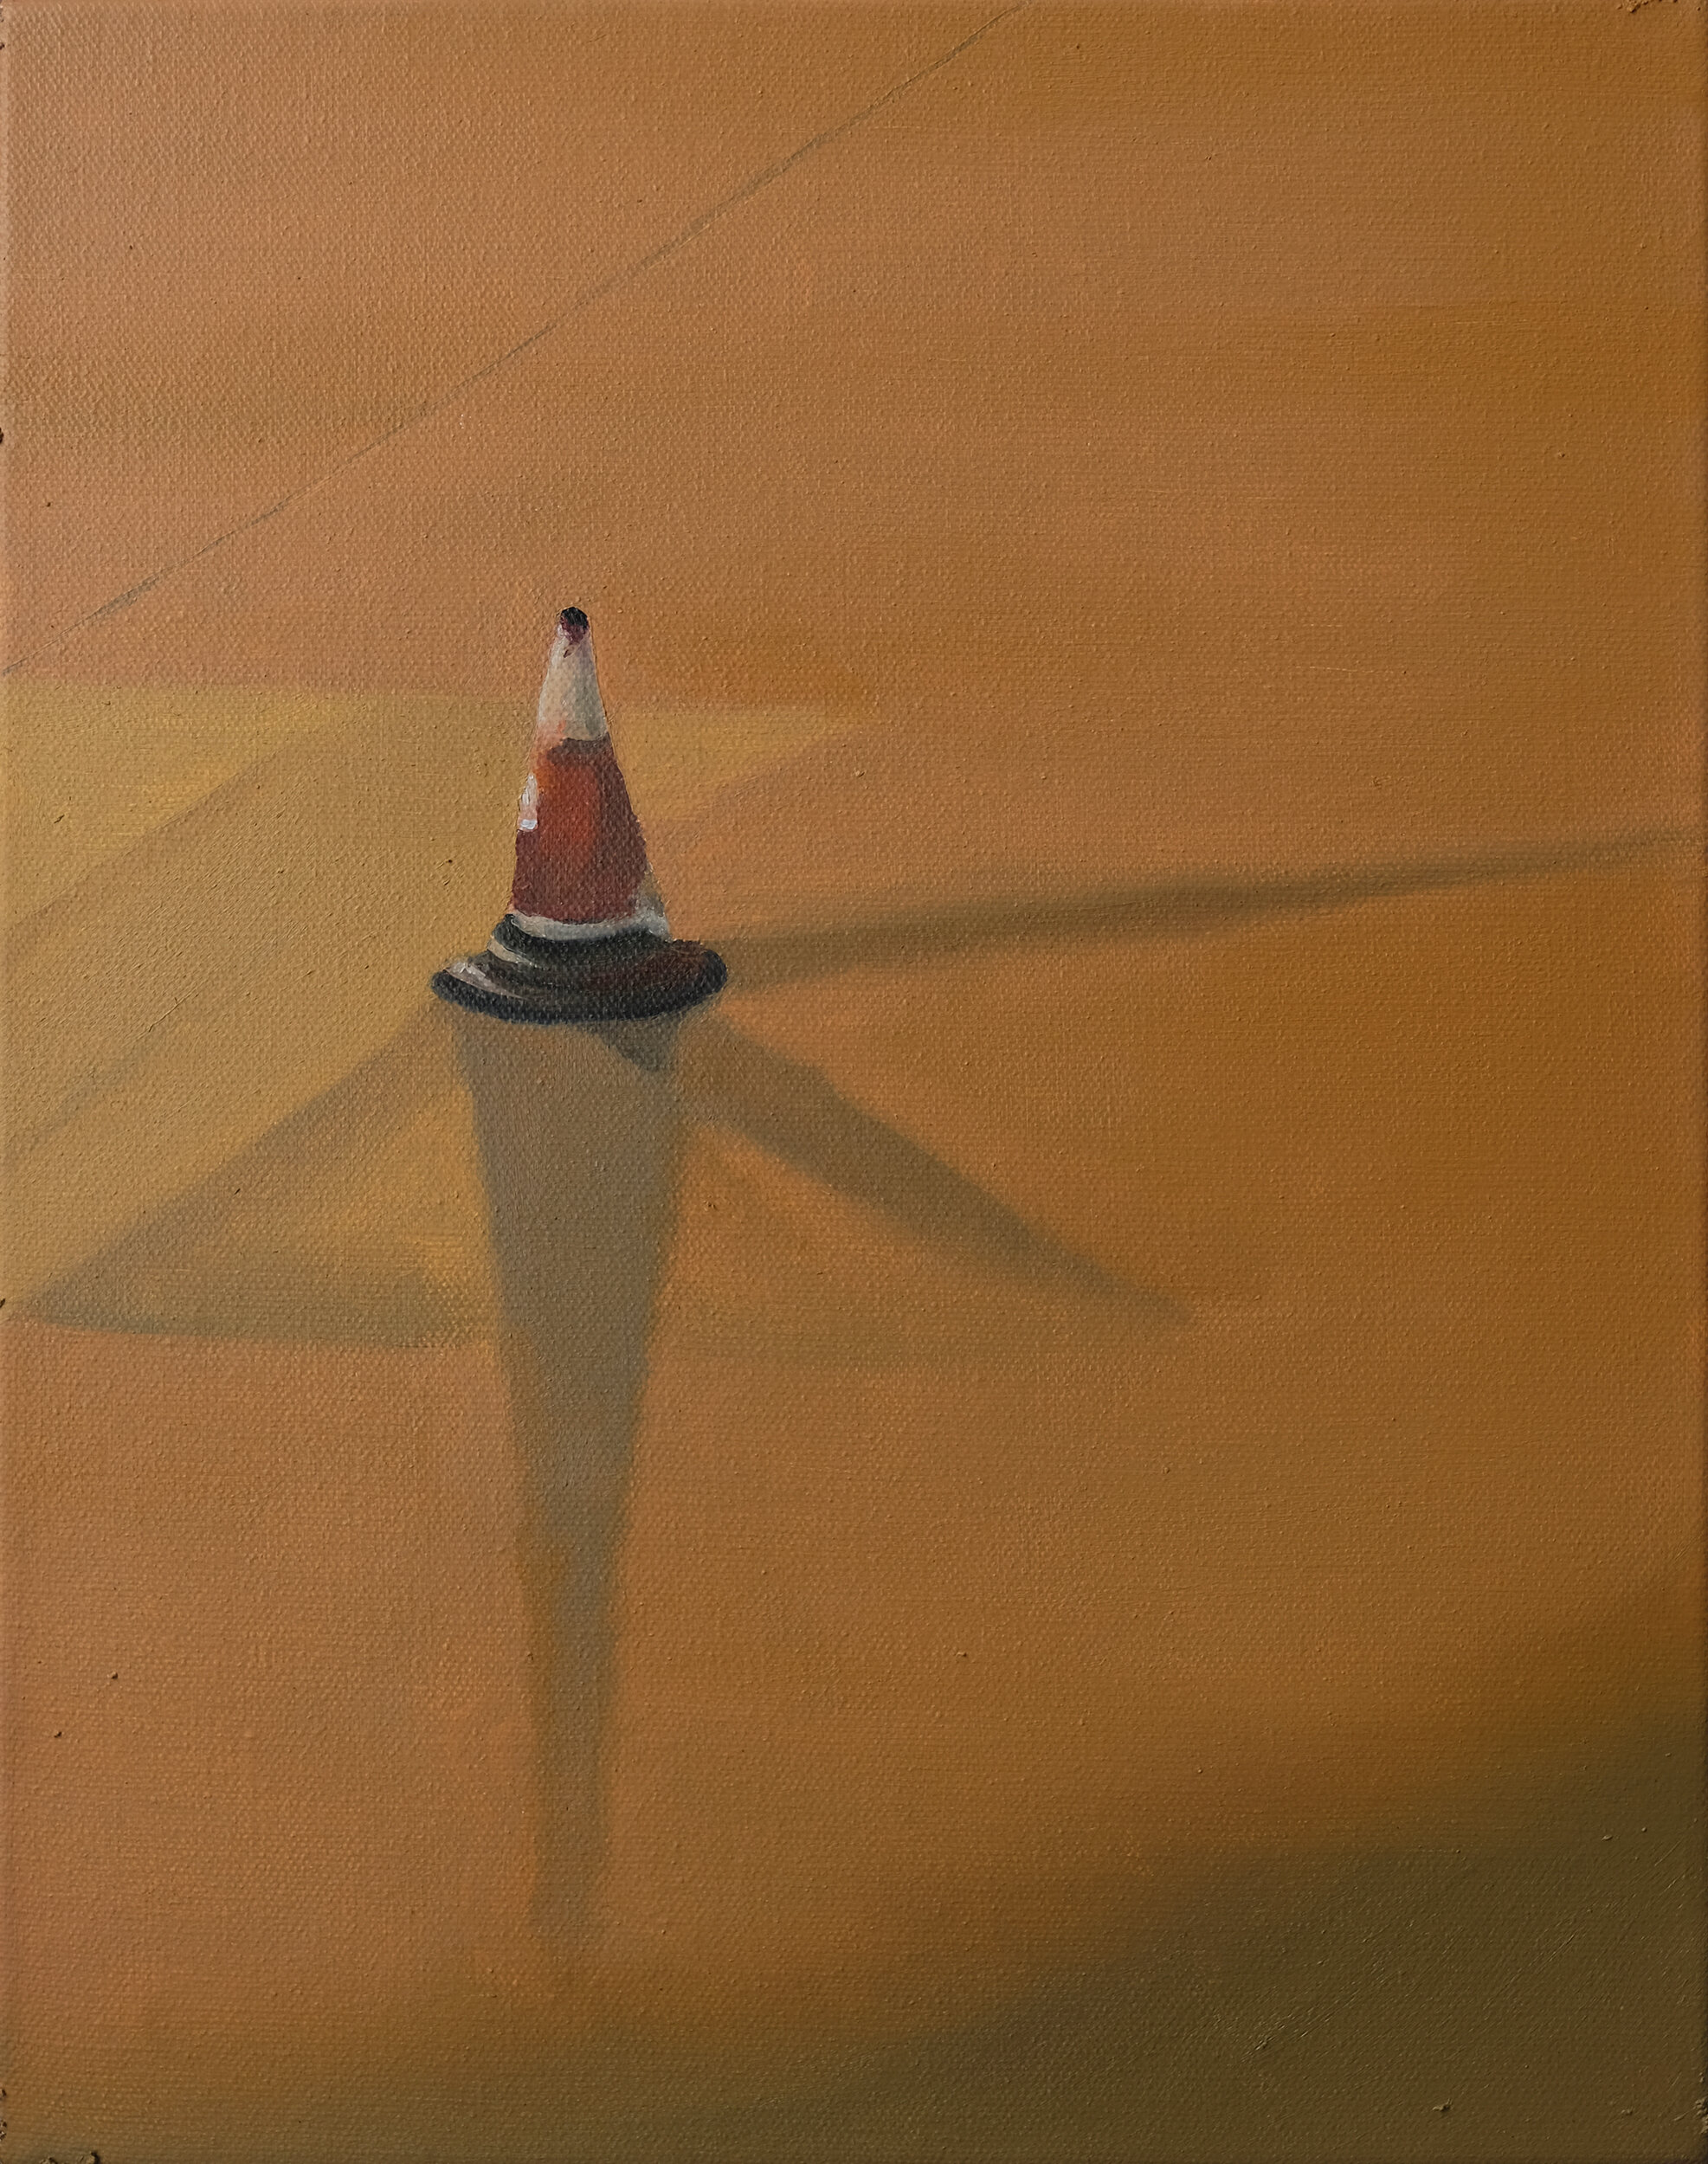 Cone with three shadows